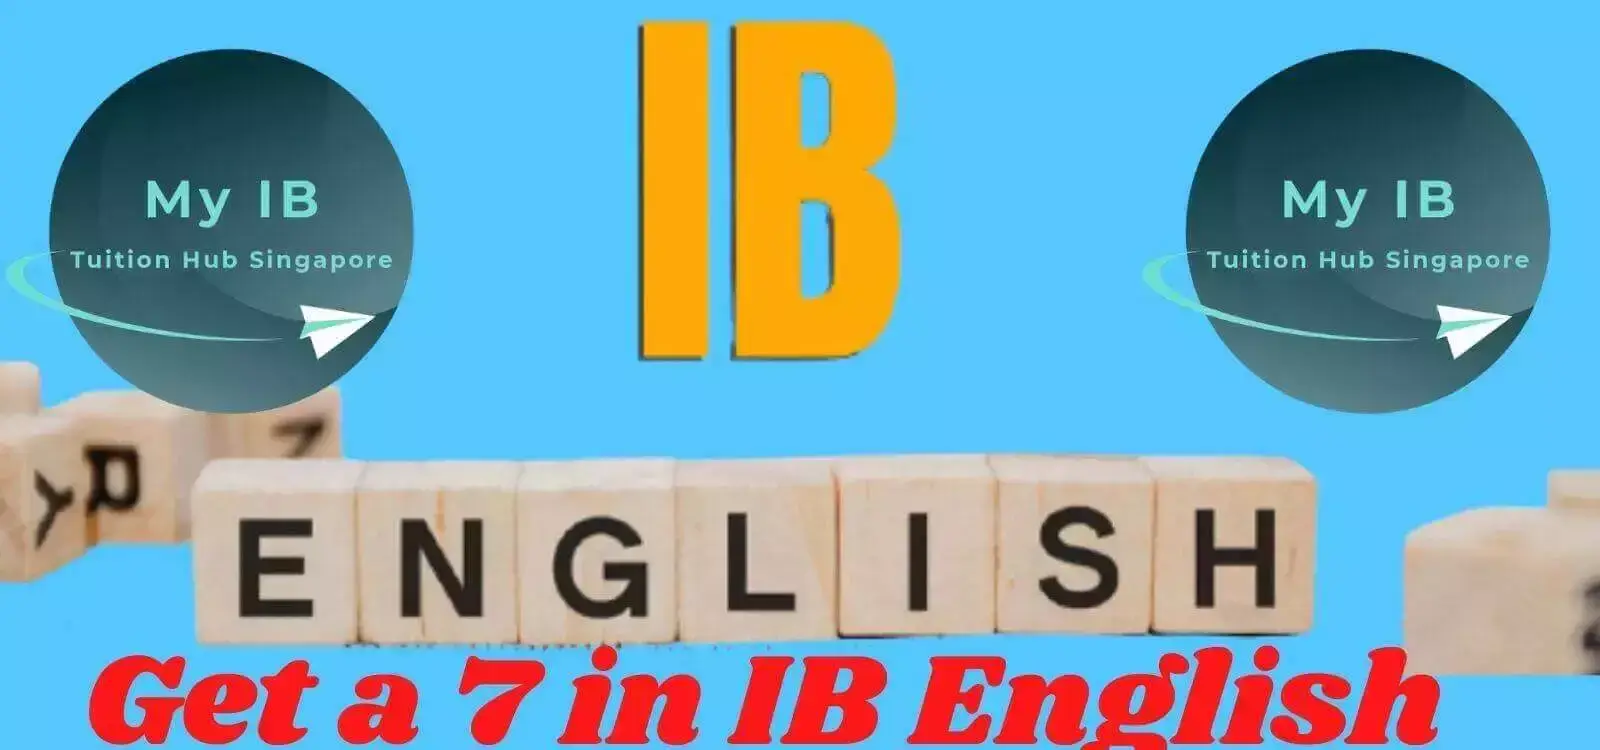 Get a 7 in IB English